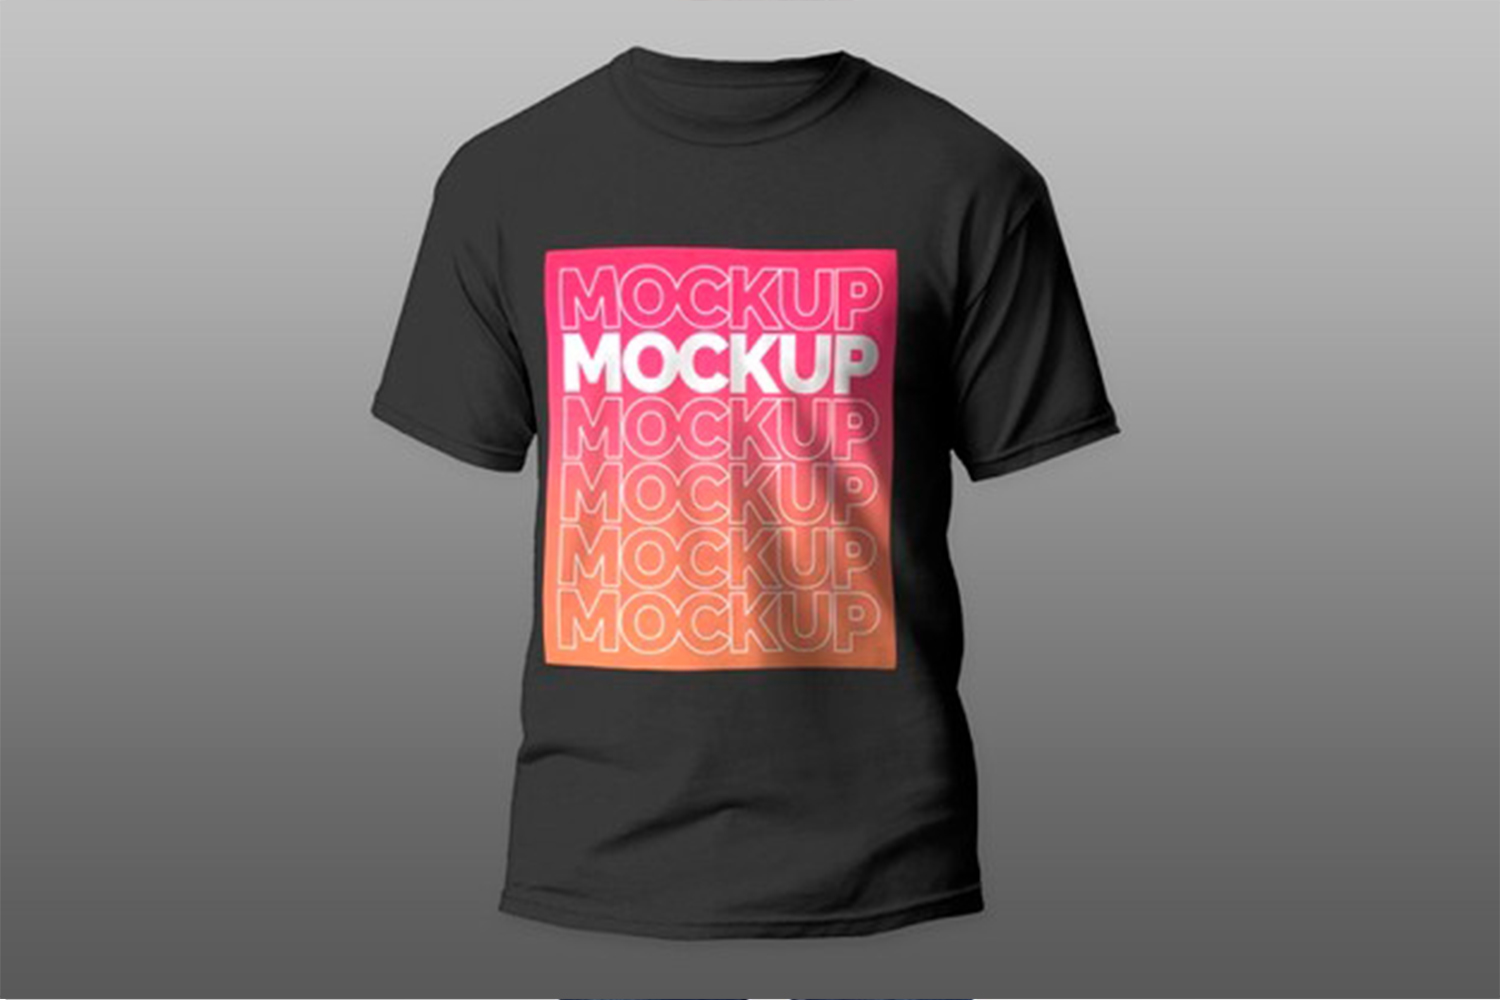 Black t-shirt Mockup Free Download 